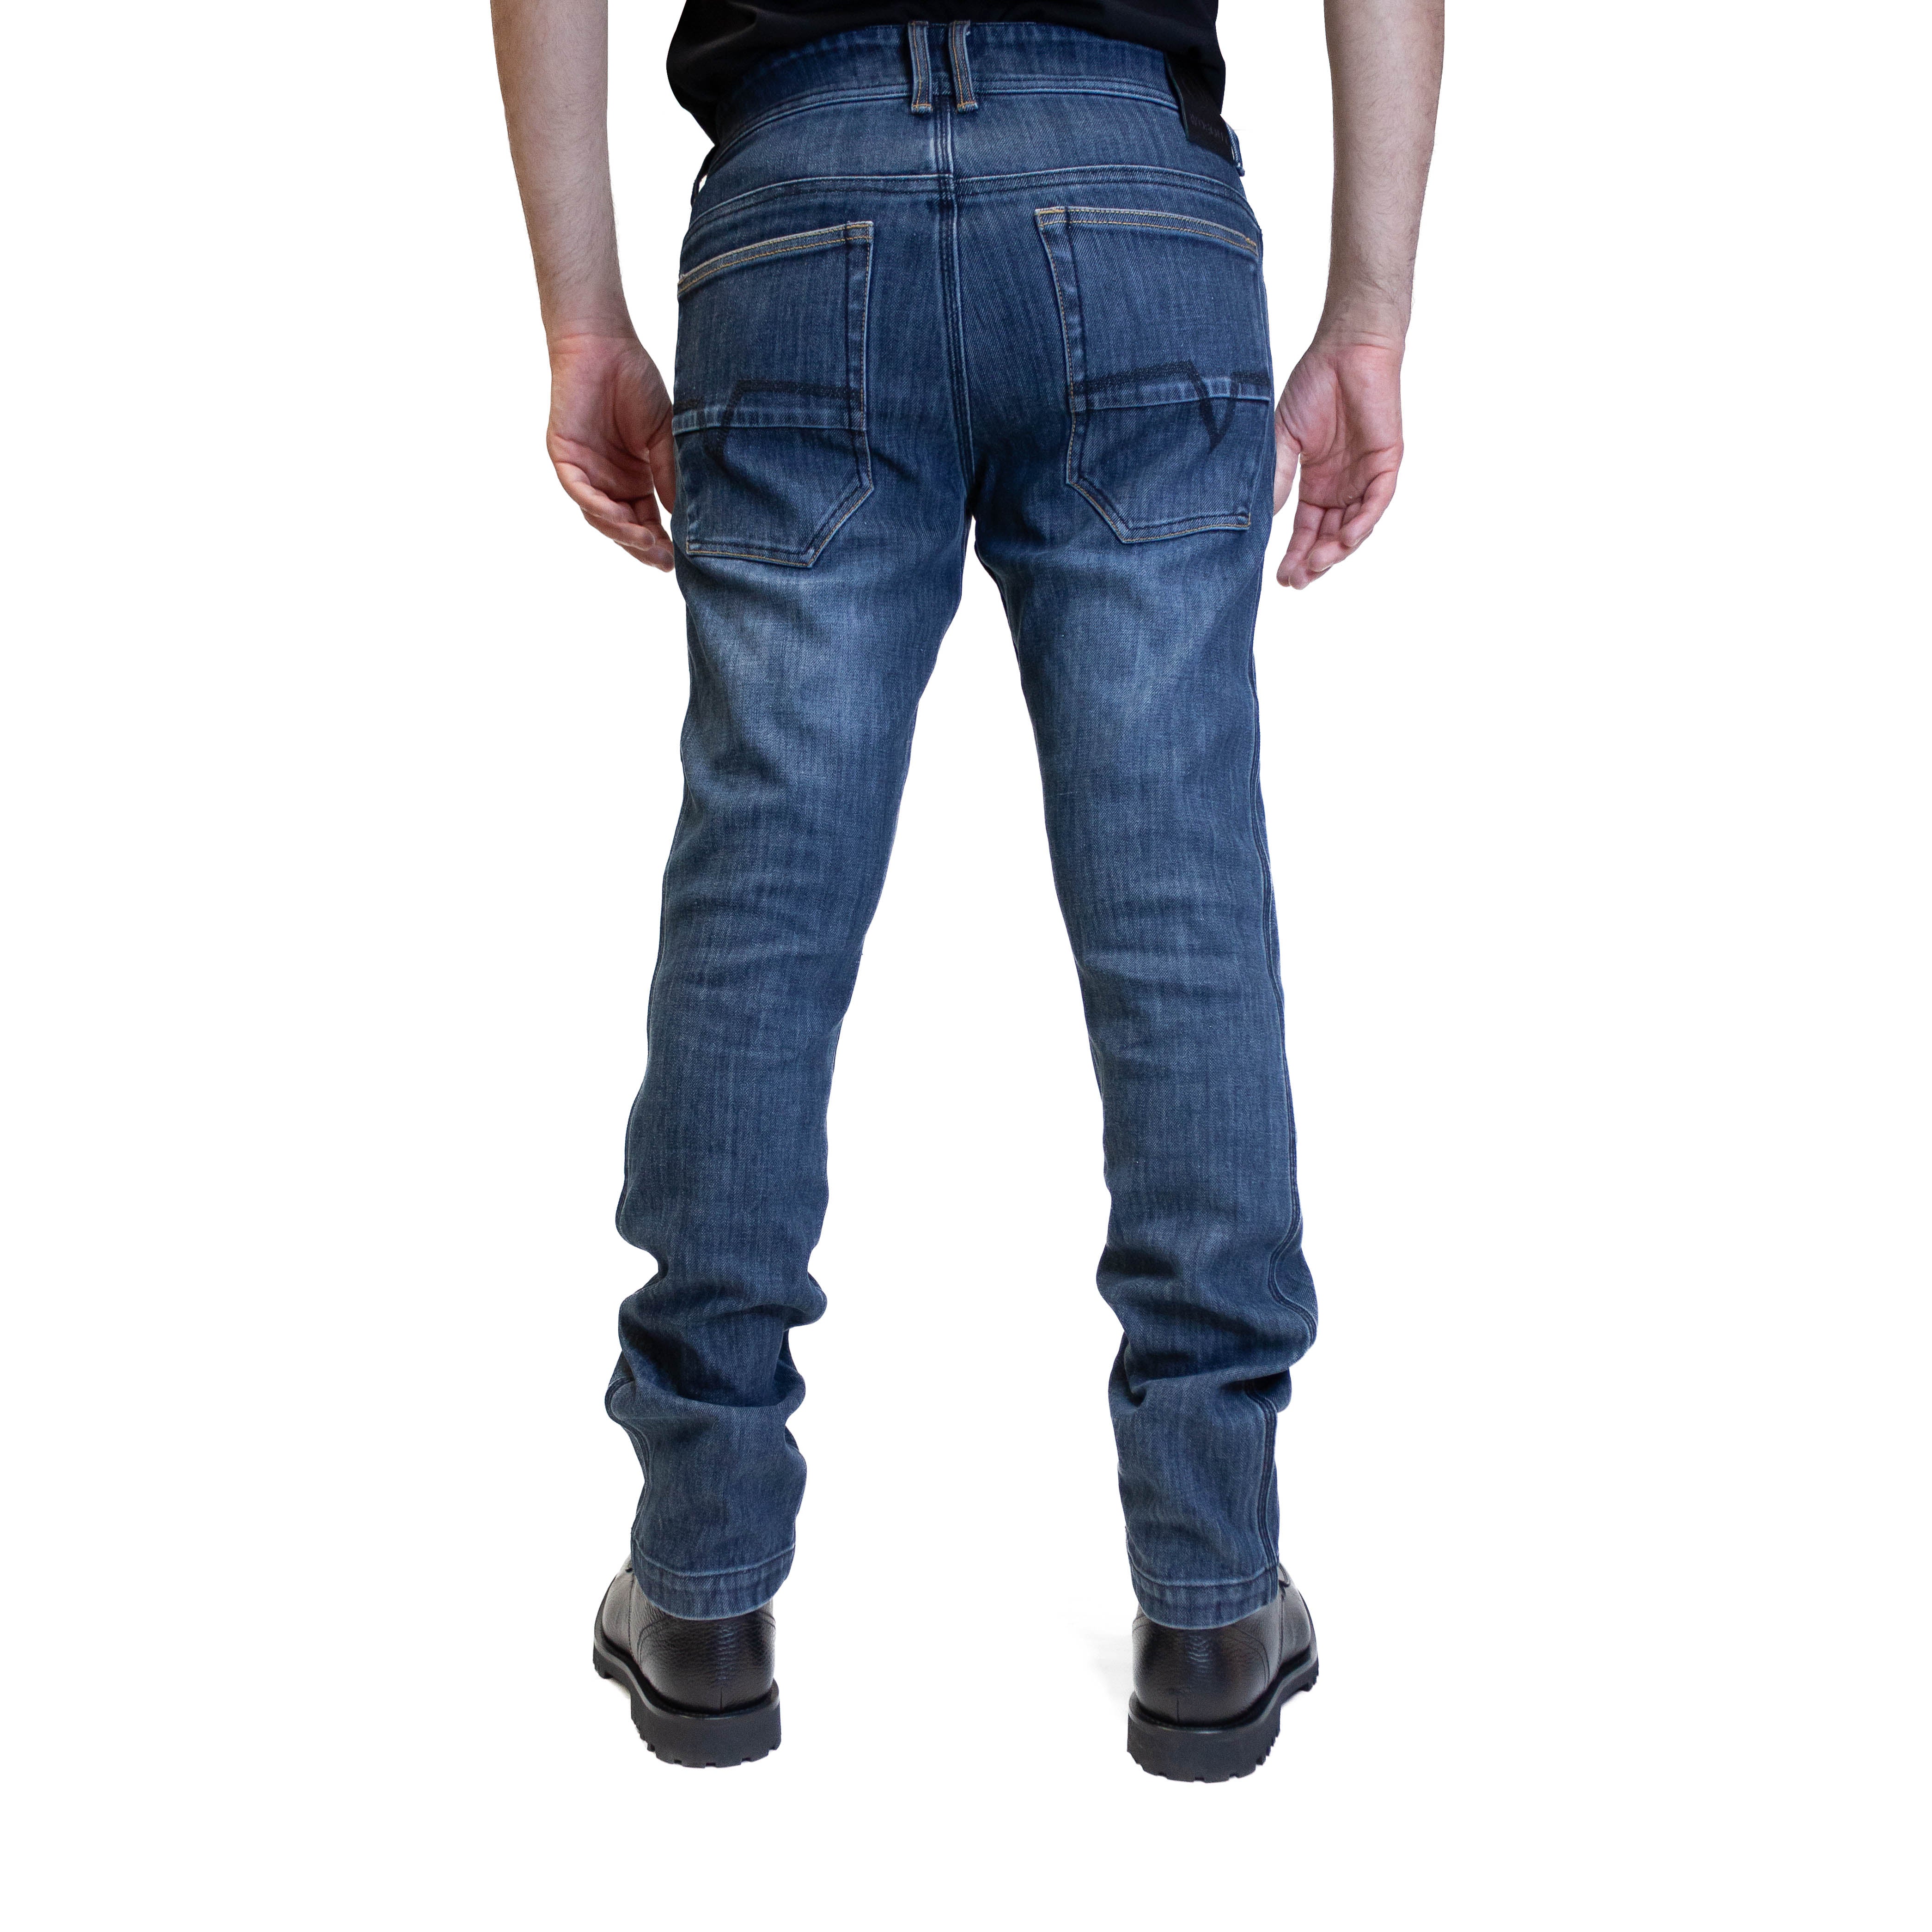 Rydeout Alpha Comfort Jeans, Length 33 - Blue